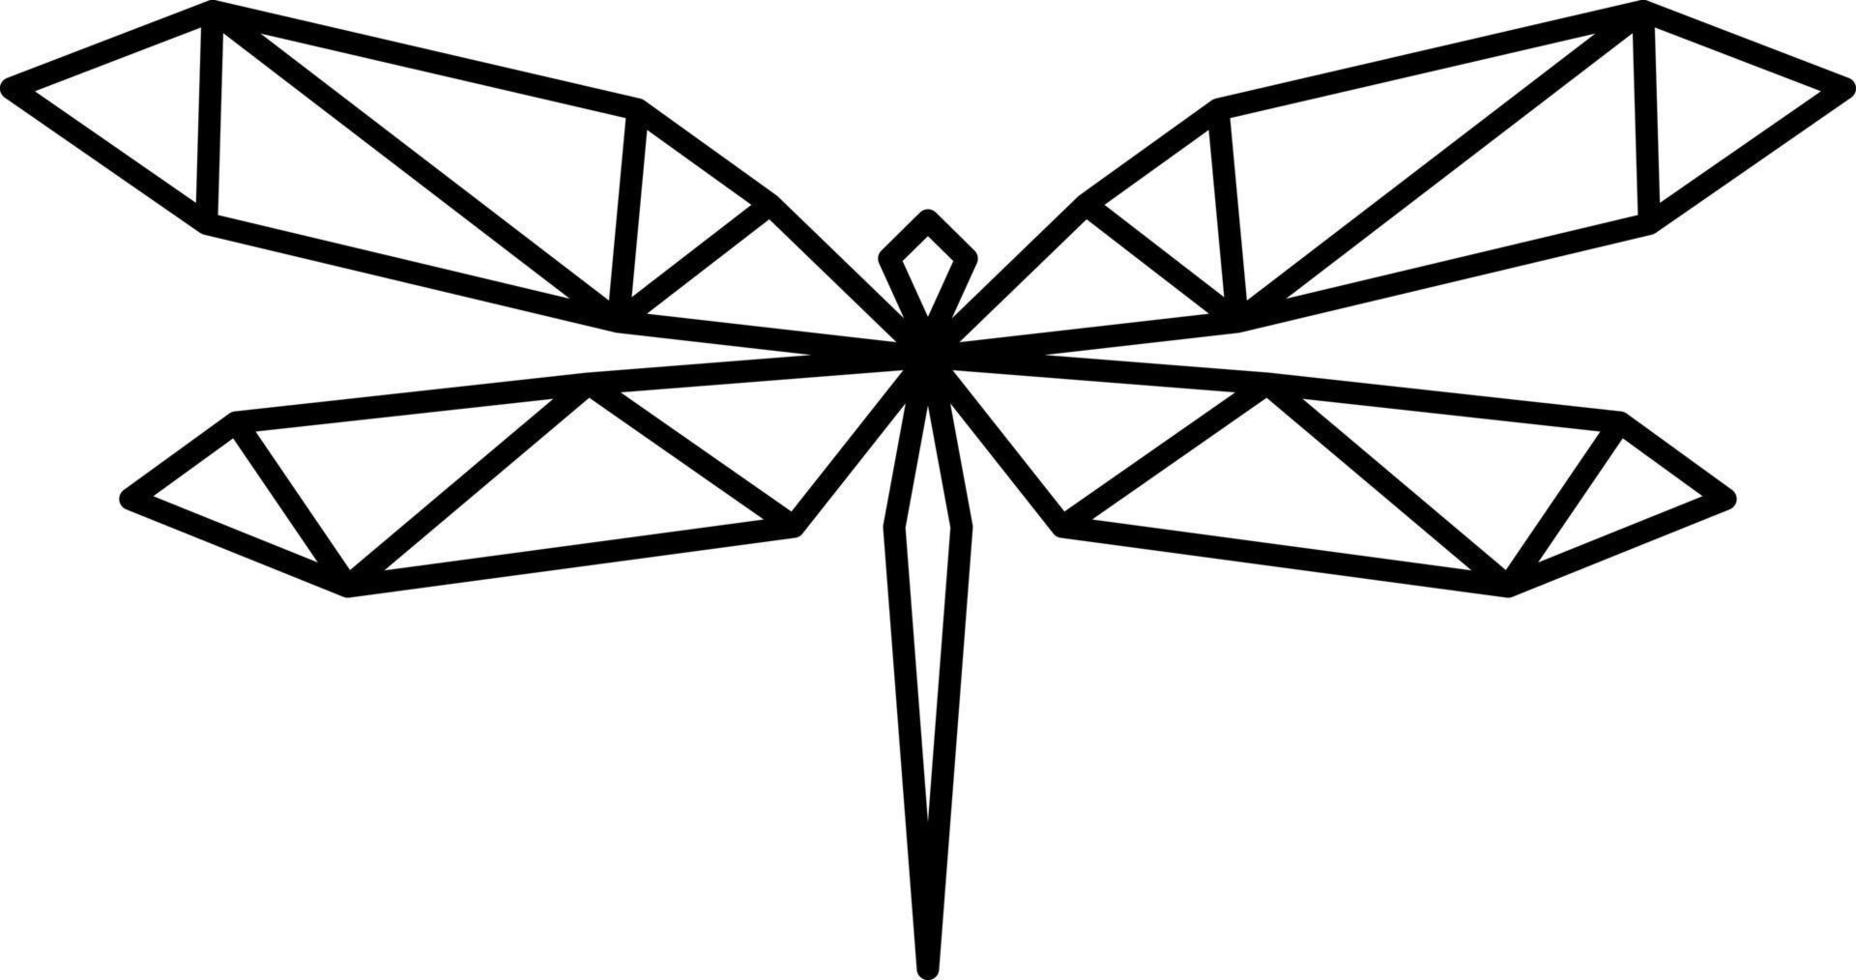 låg polly trollslända logotyp, geometrisk symbol vektor